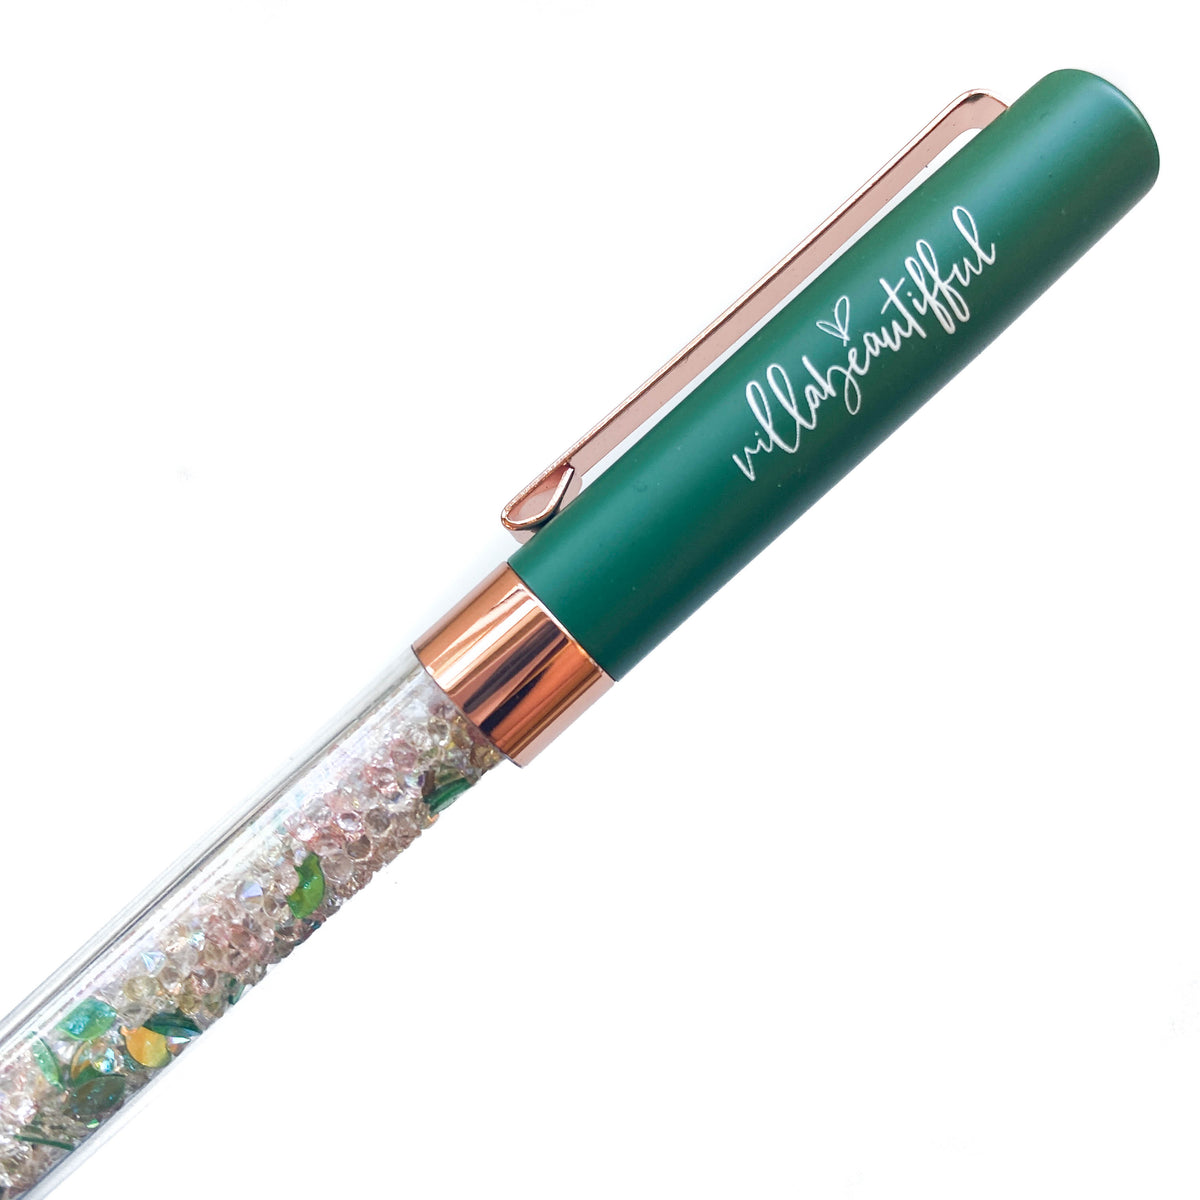 Plant Mama Crystal VBPen | limited kit pen